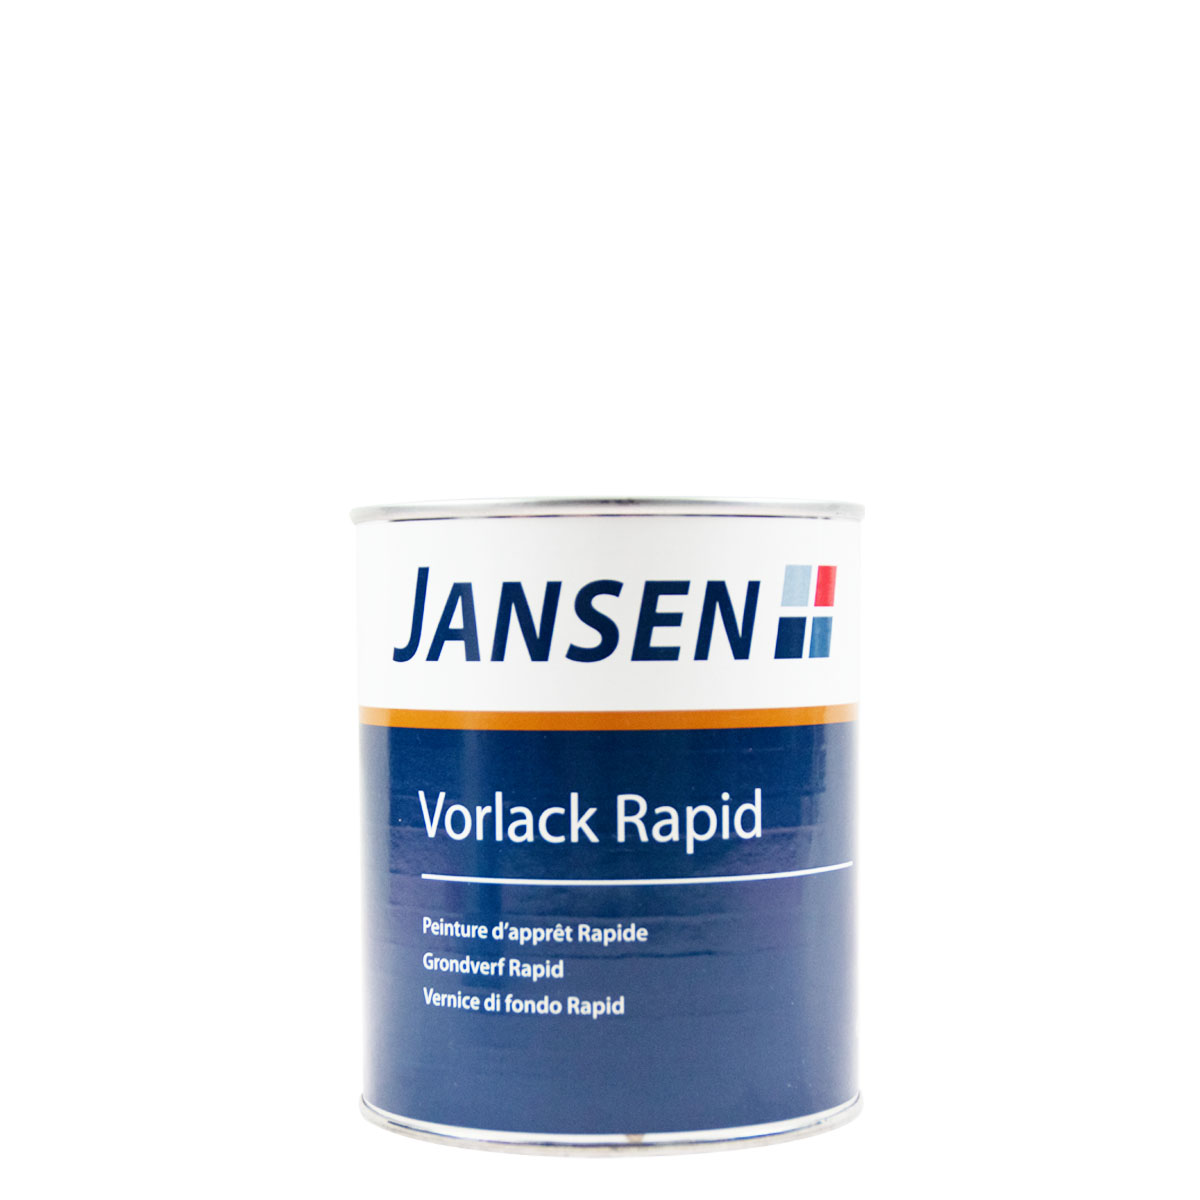 jansen_vorlack_rapid_gross